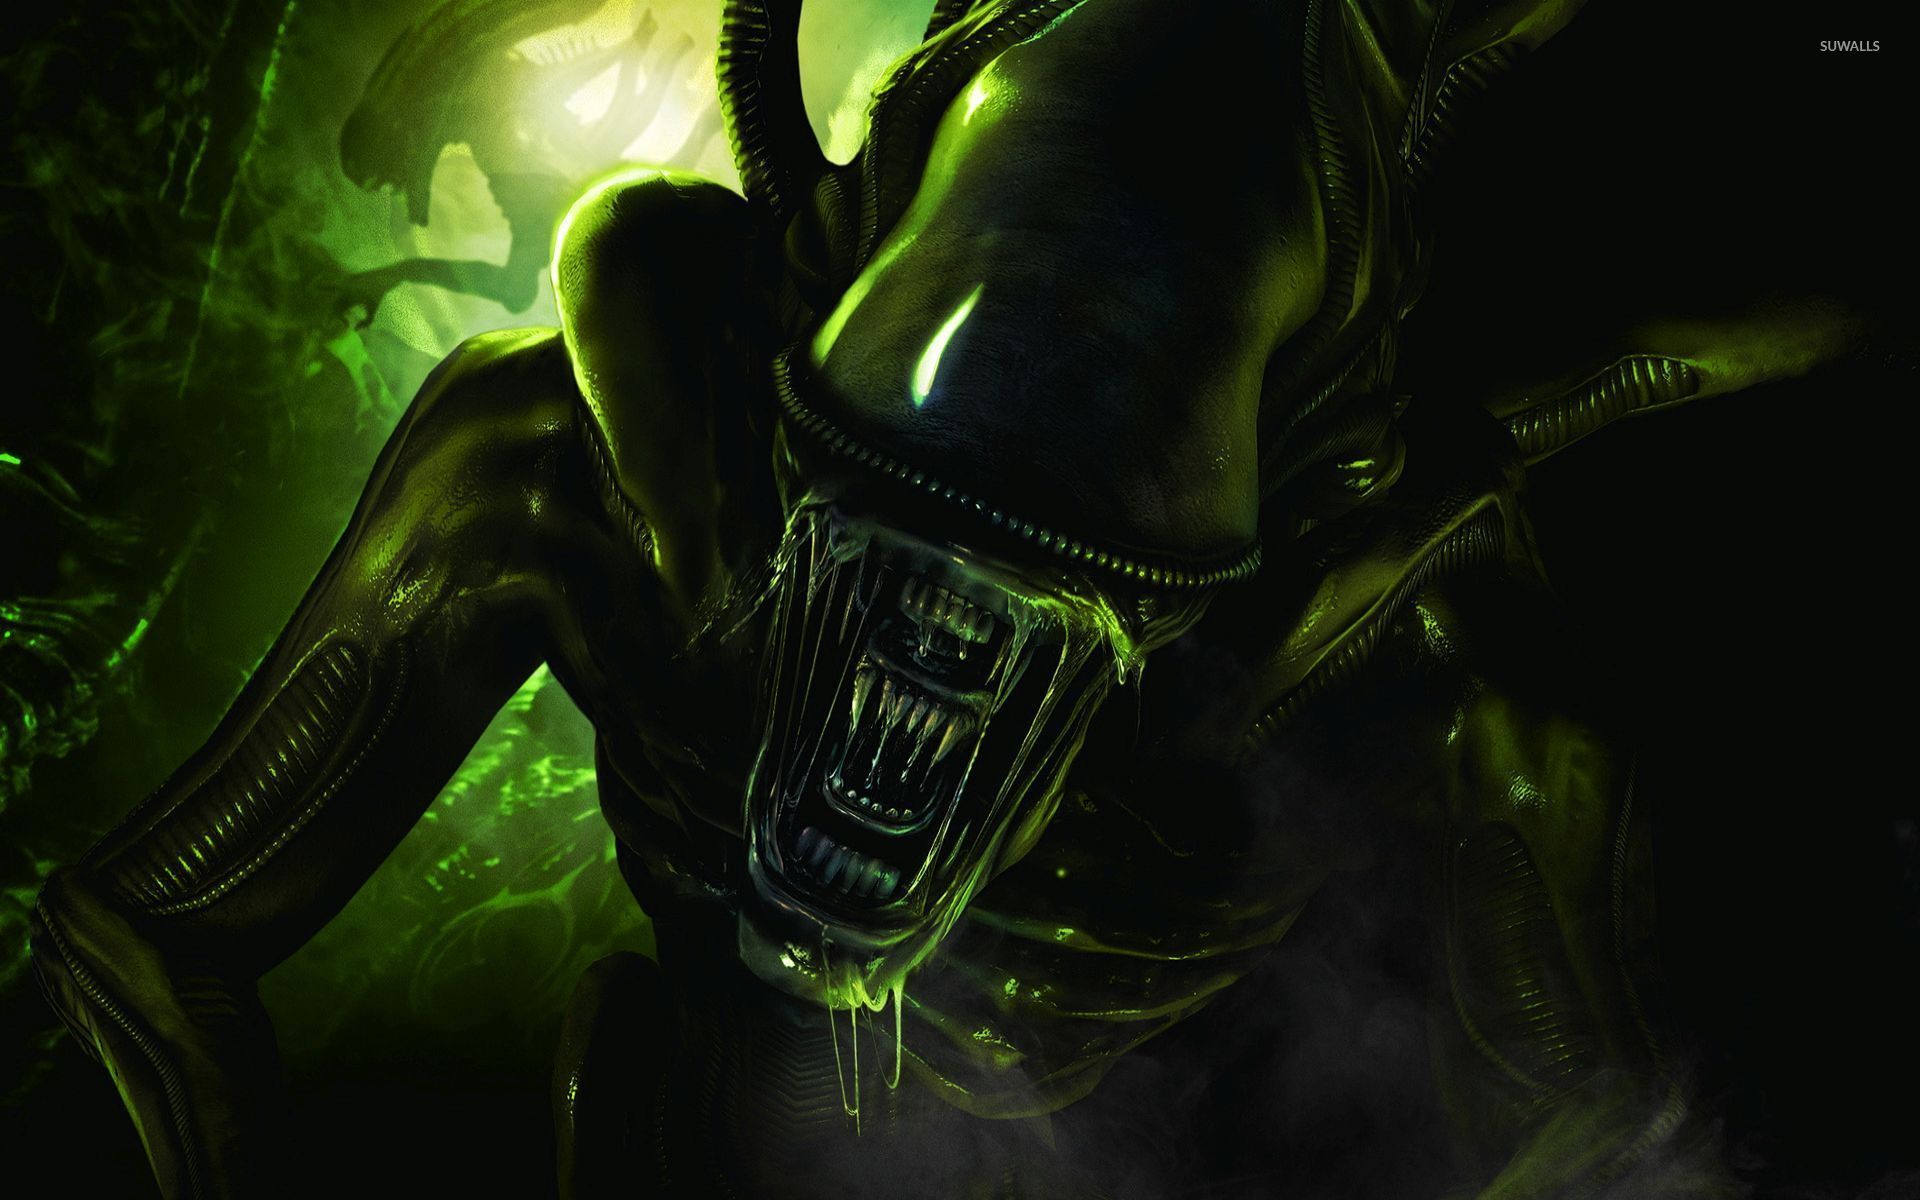 Scary green alien wallpaper .suwalls.com